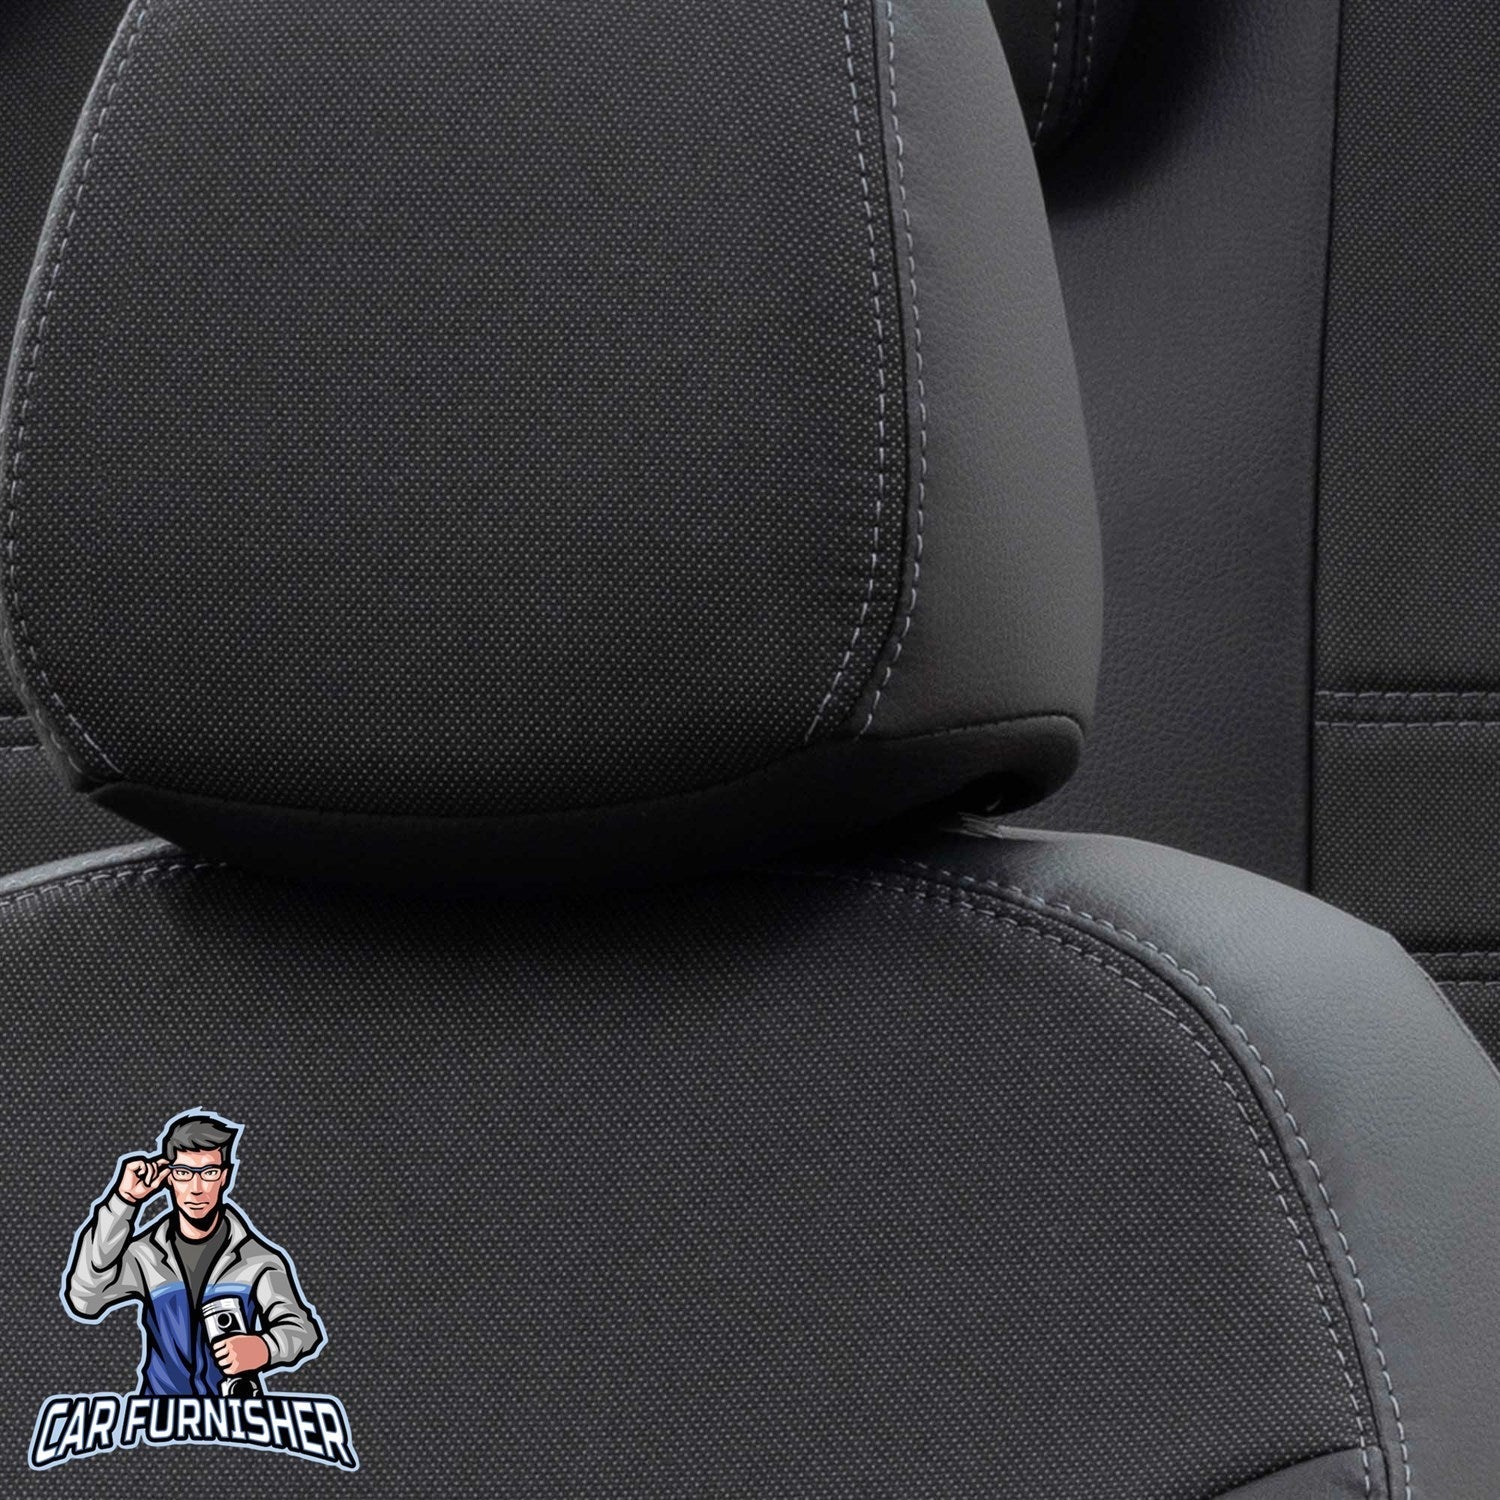 Dacia Sandero Car Seat Covers 2008-2023 B90 / Stepway Paris Black Full Set (5 Seats + Handrest) Leather & Fabric